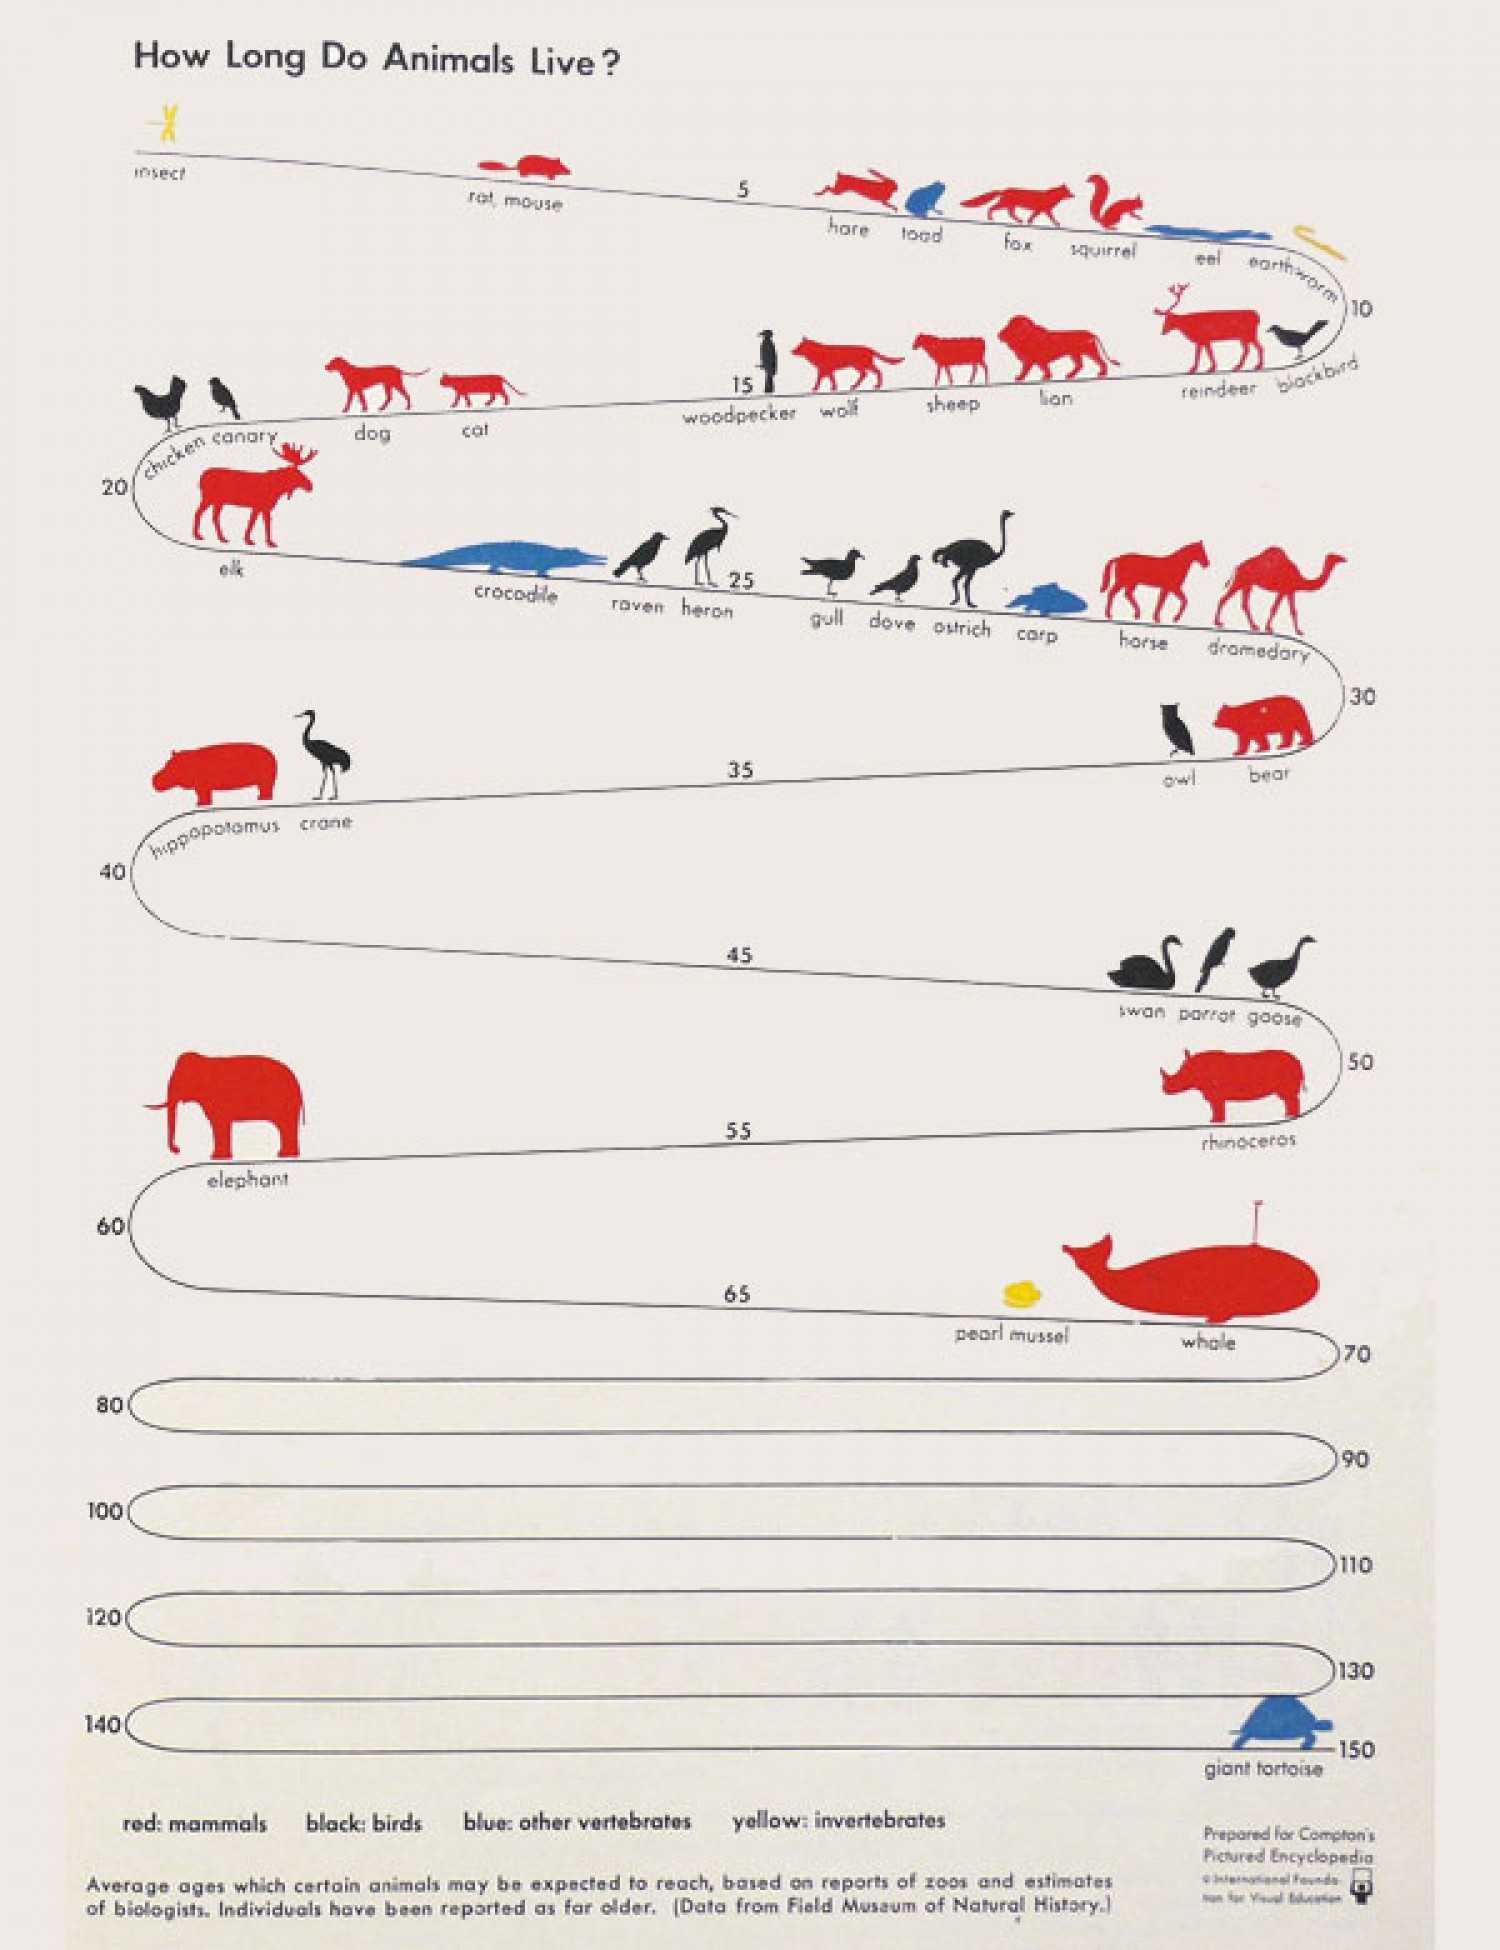 How Long Do Animals Live